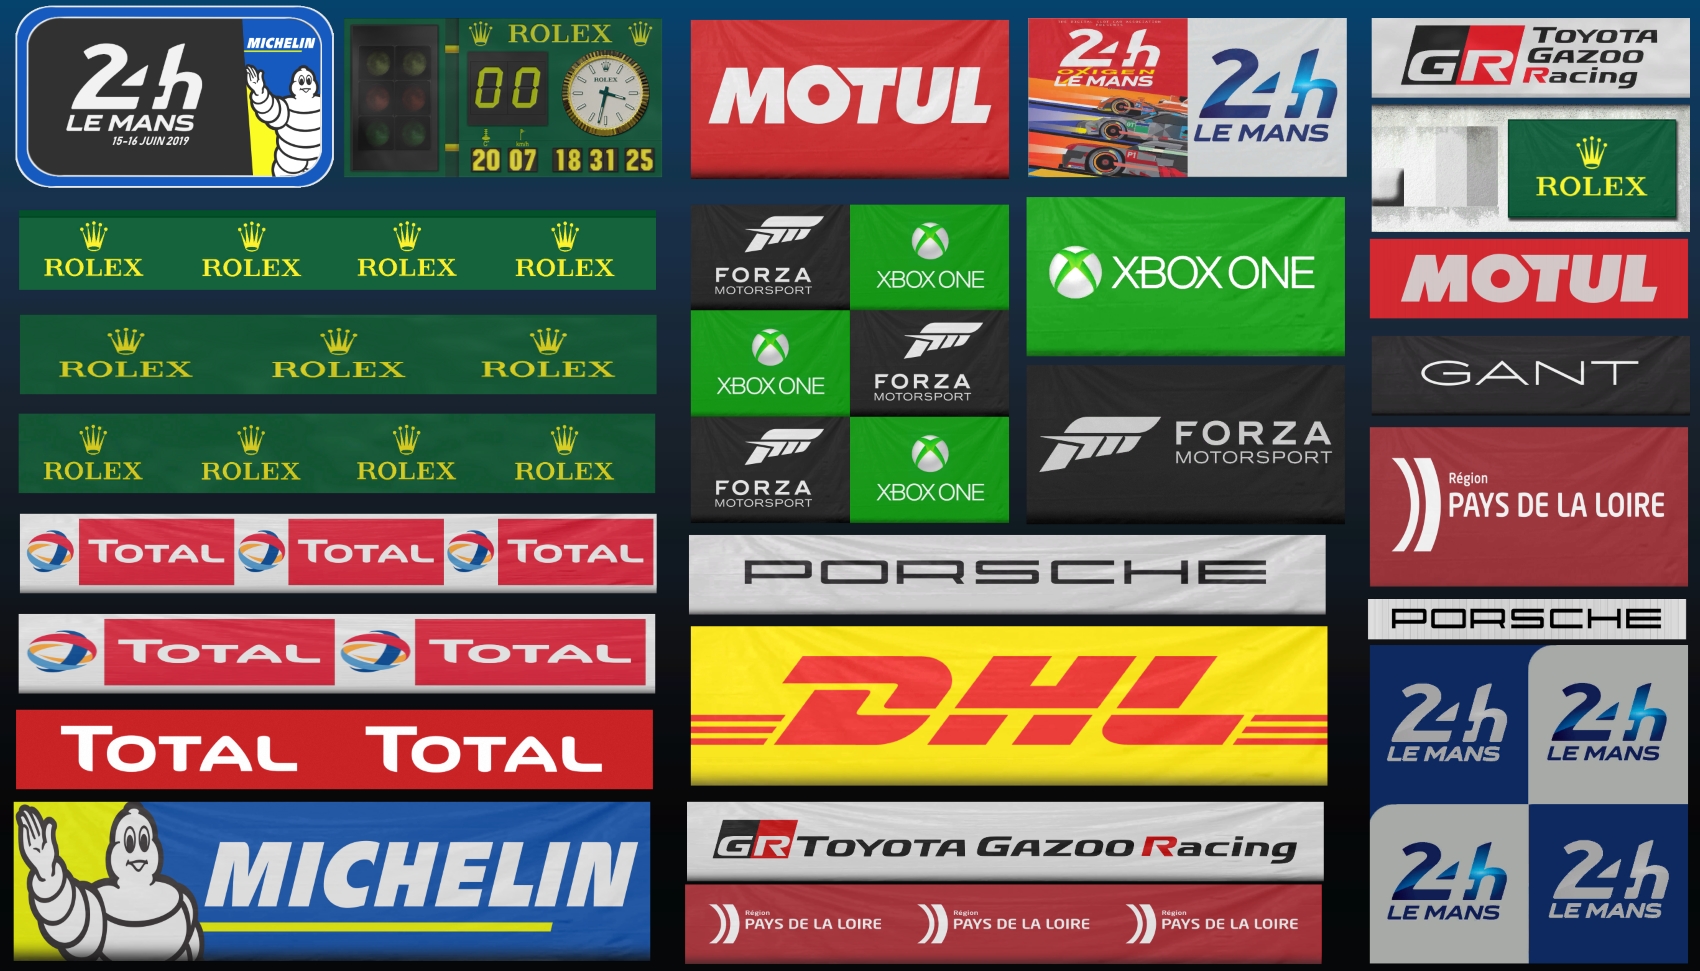 Le Mans Banners 2019.jpg